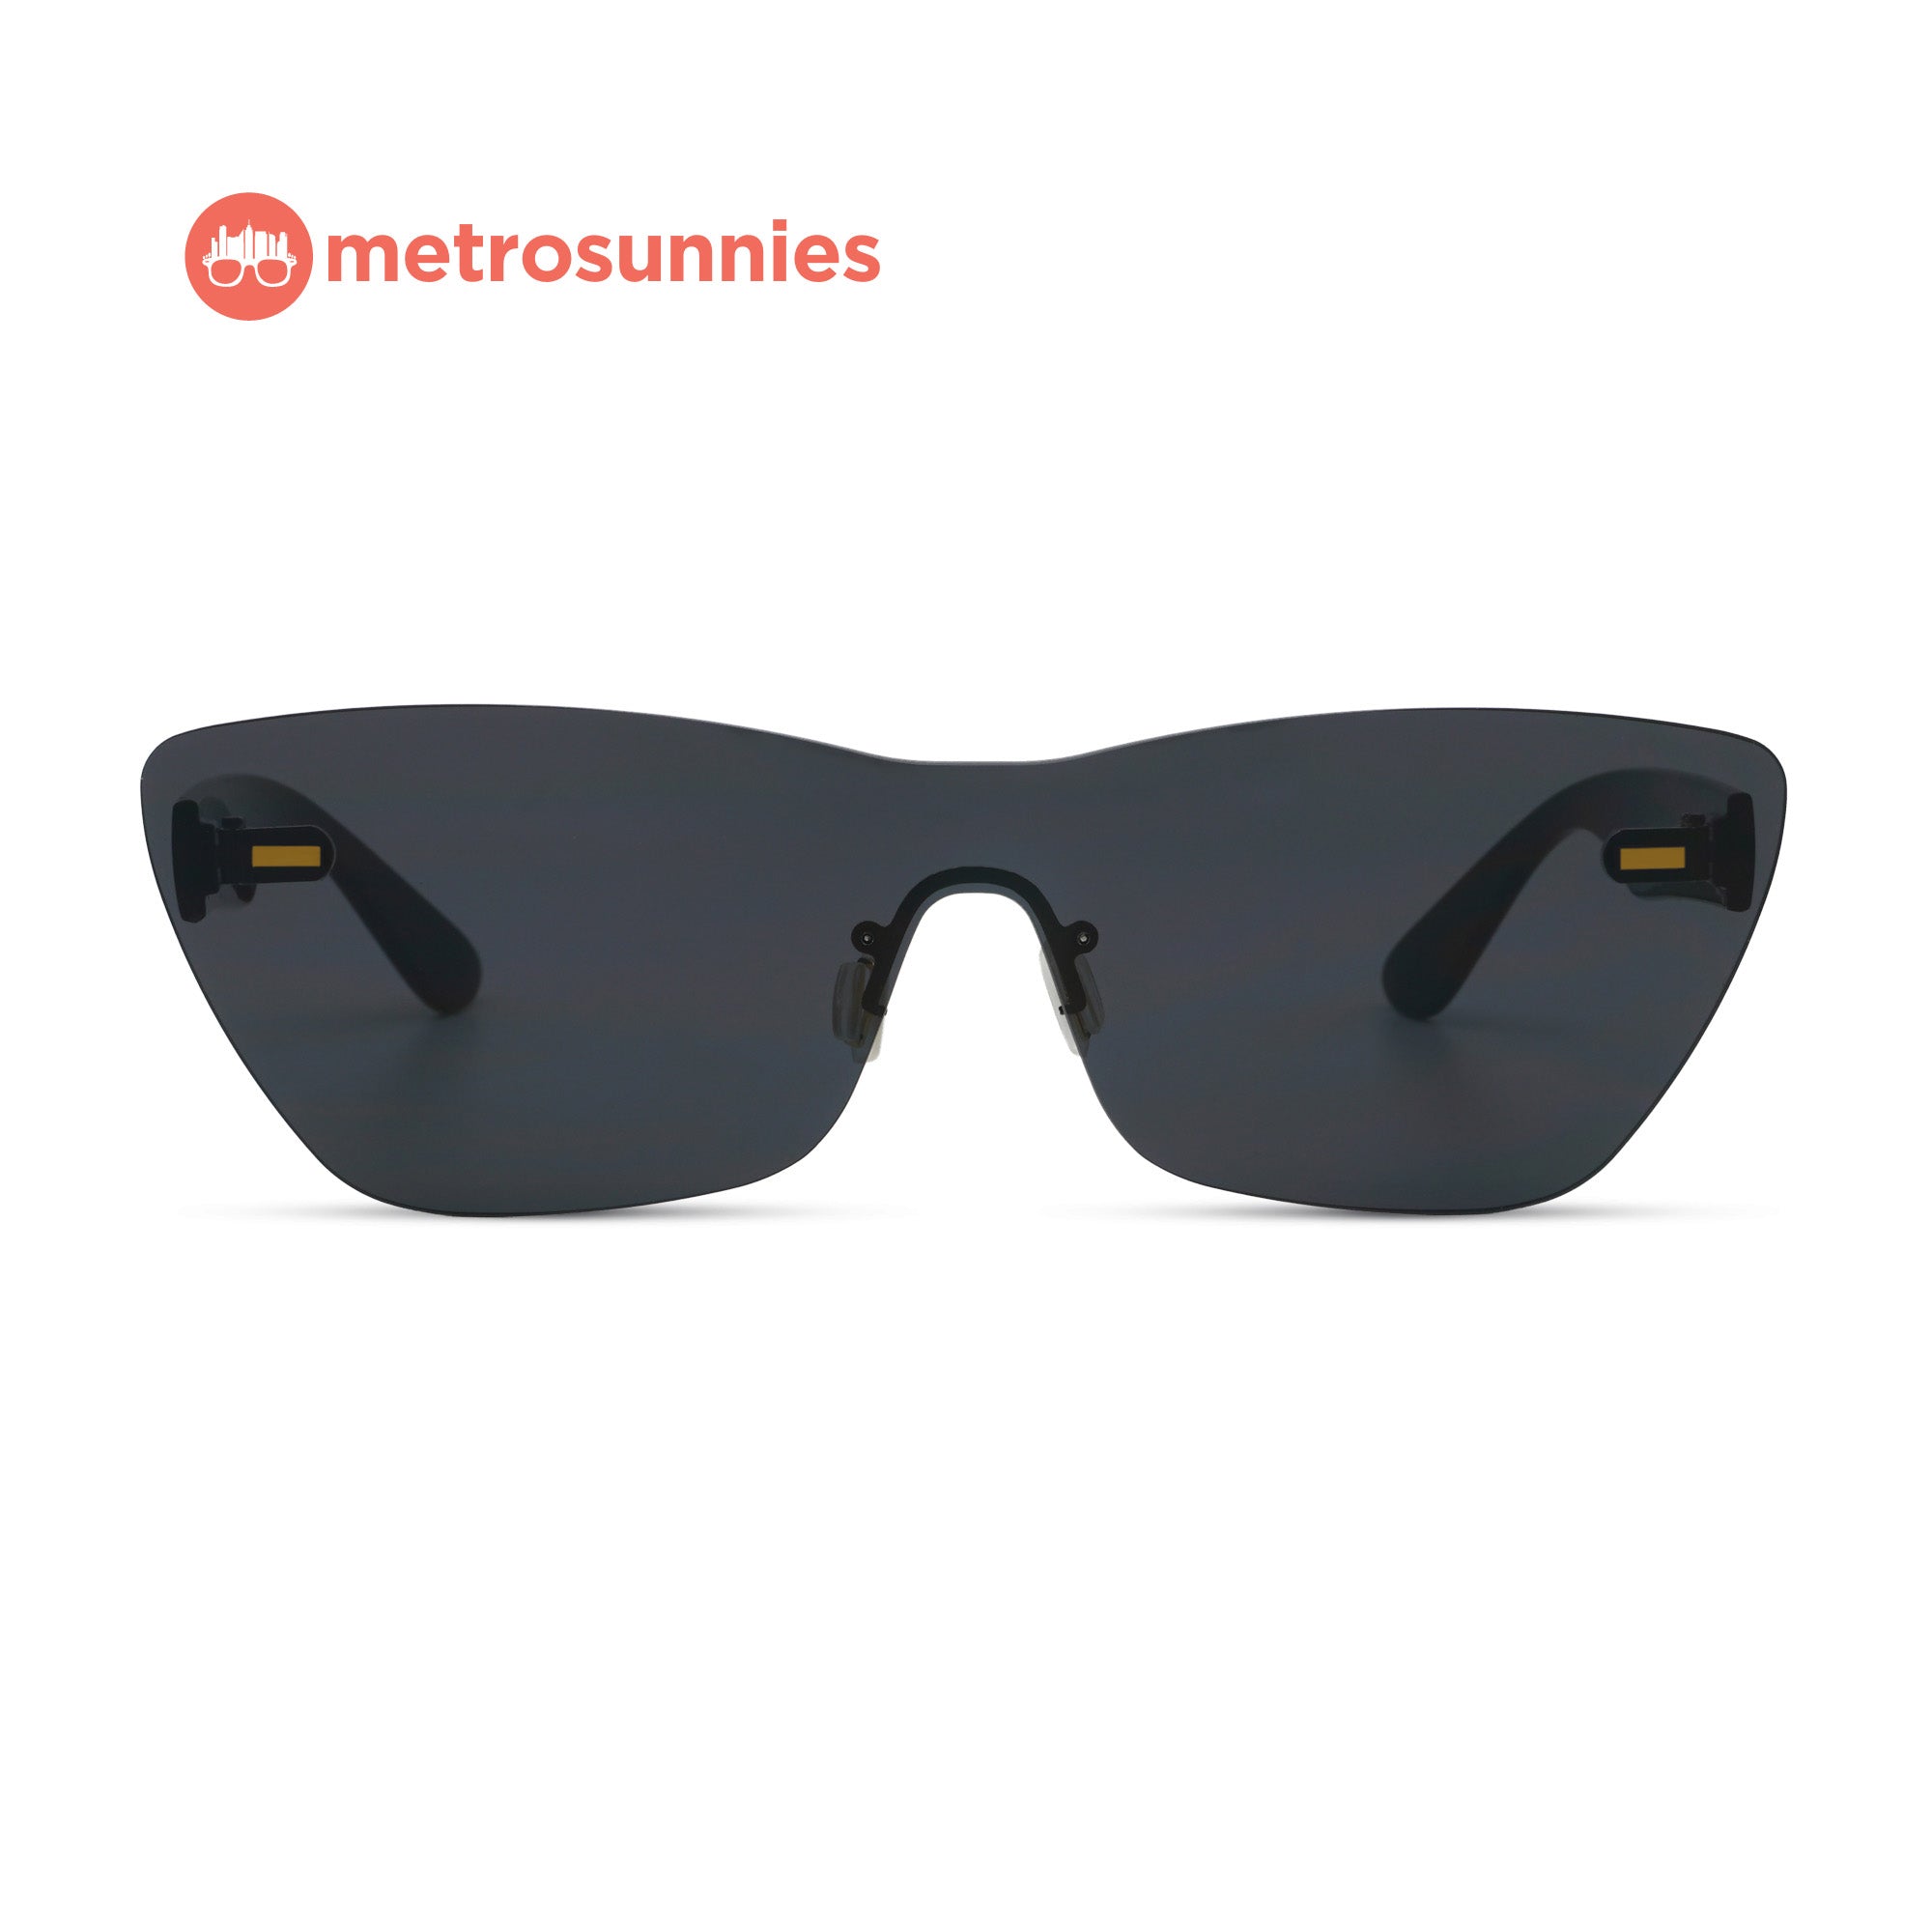 MetroSunnies Nick Sunnies (Black) / Sunglasses with UV400 Protection / Fashion Eyewear Unisex